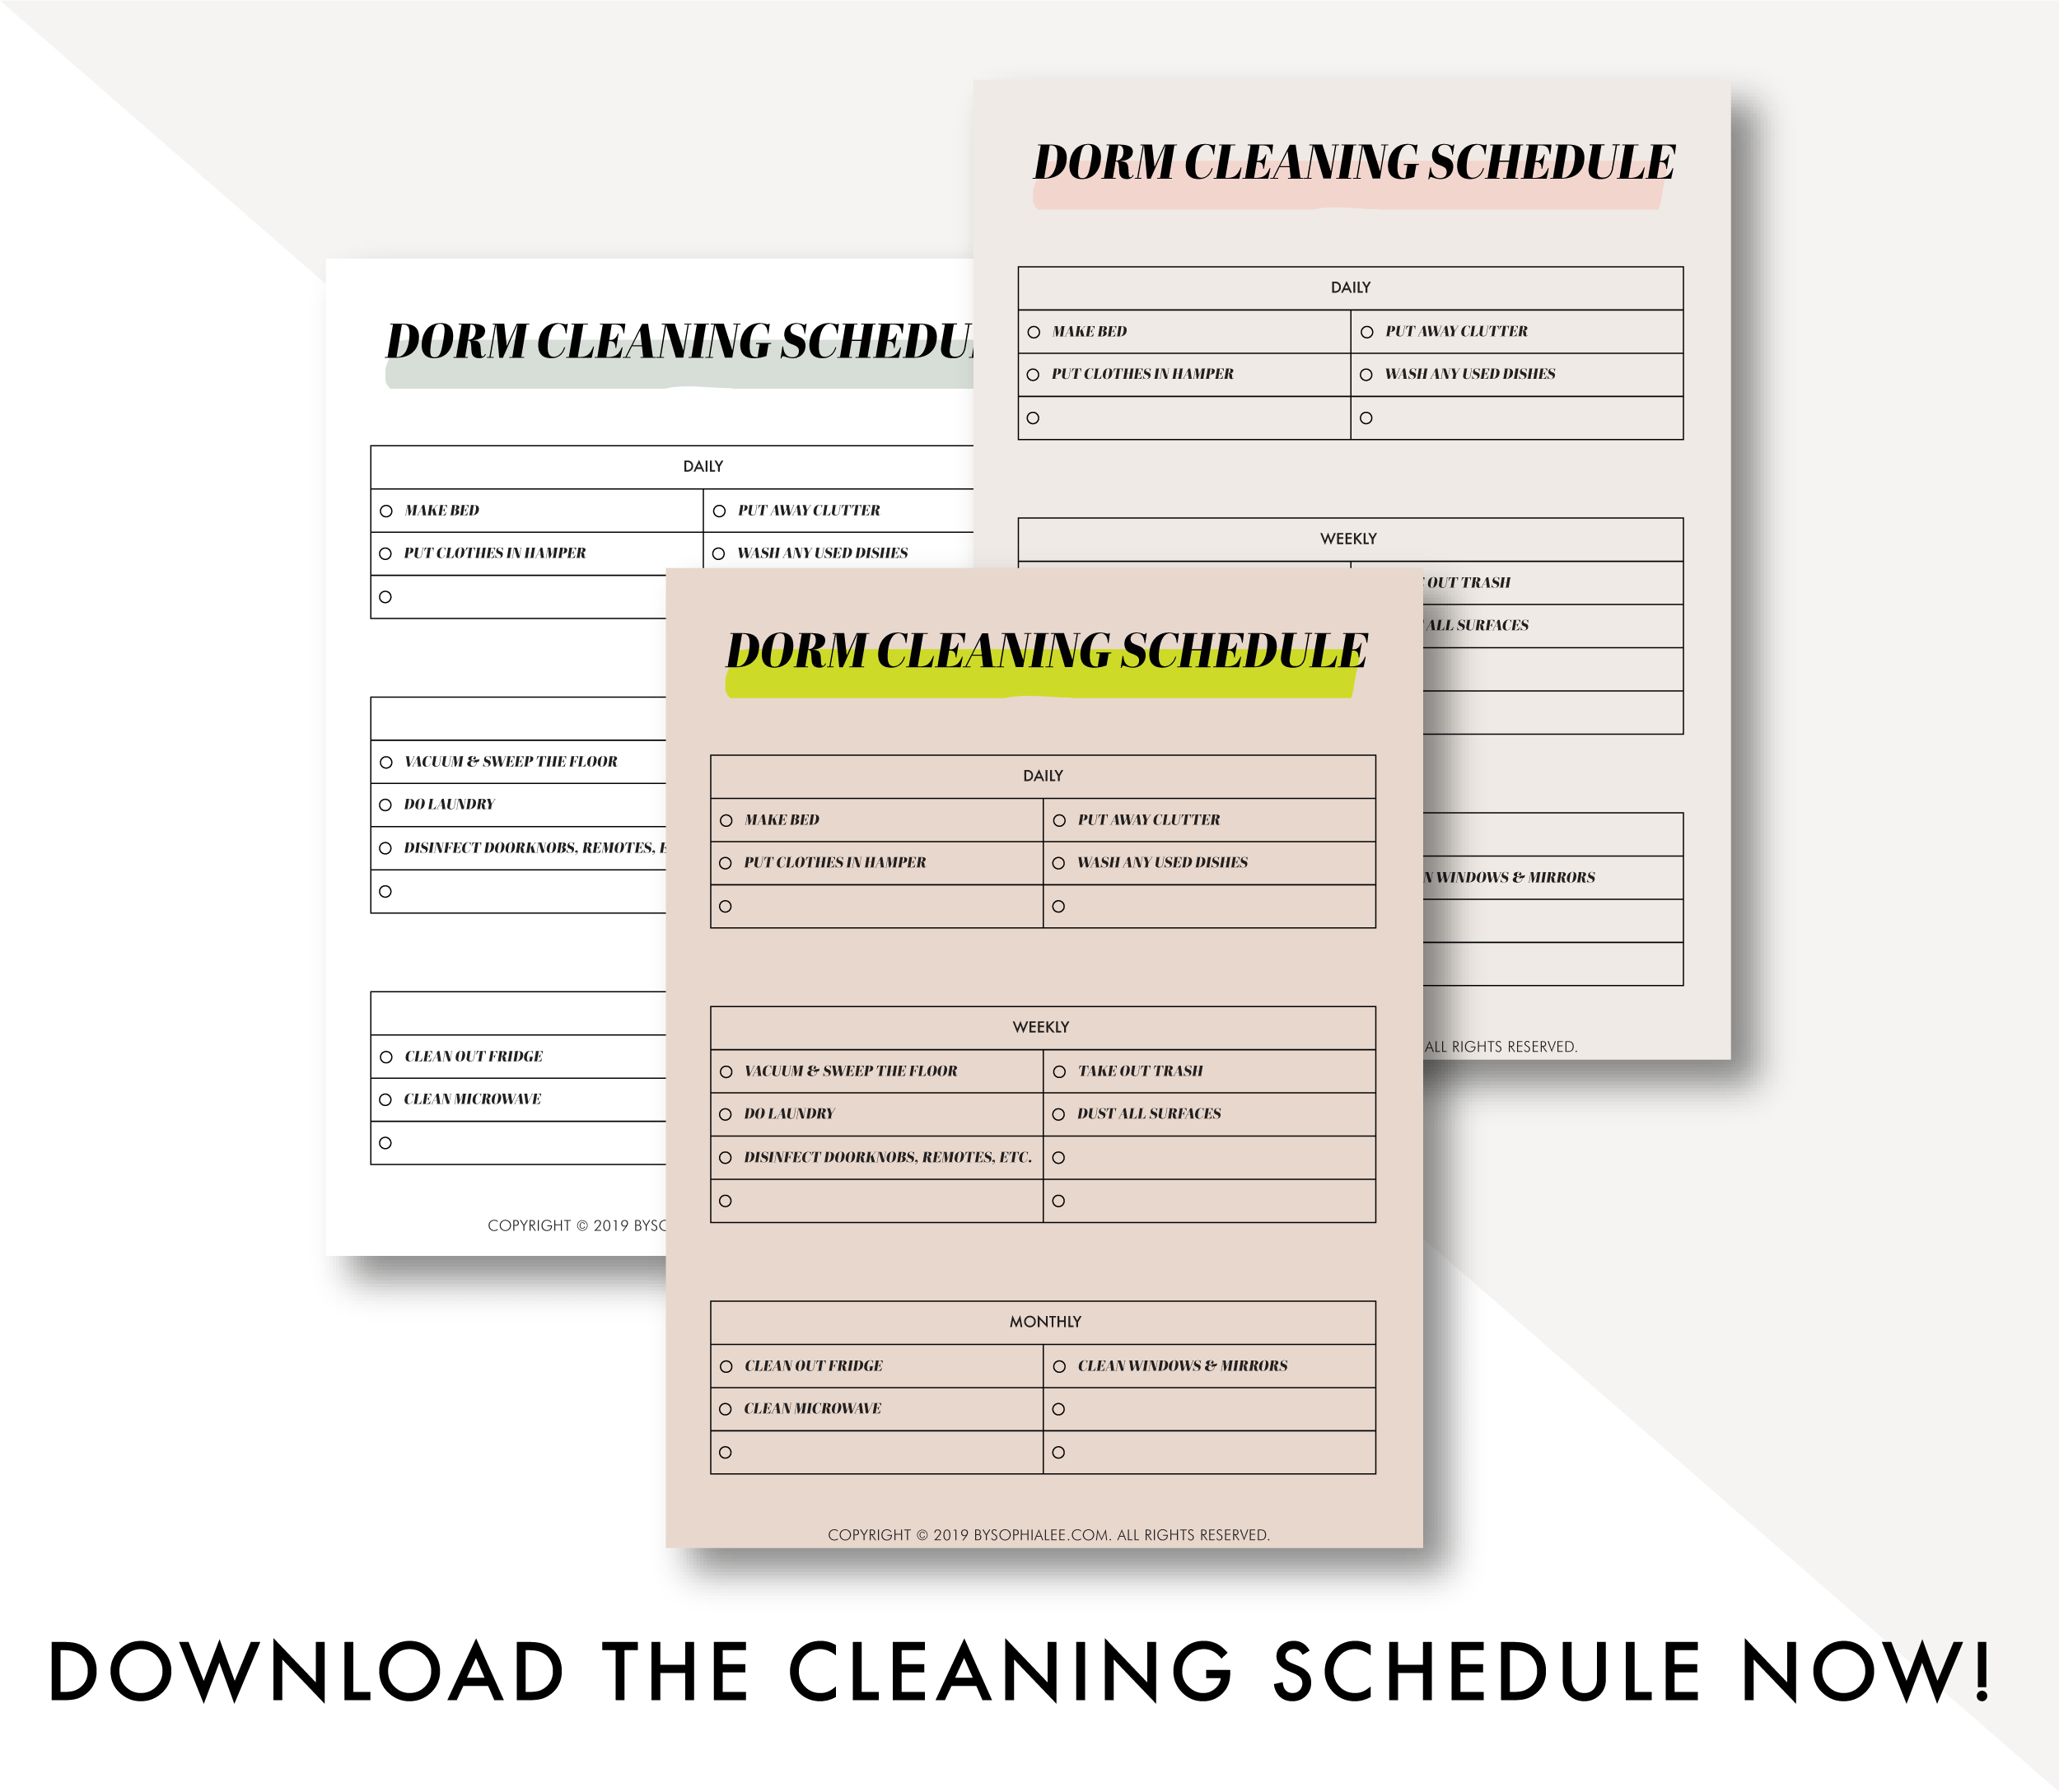 dorm cleaning schedule by sophia lee